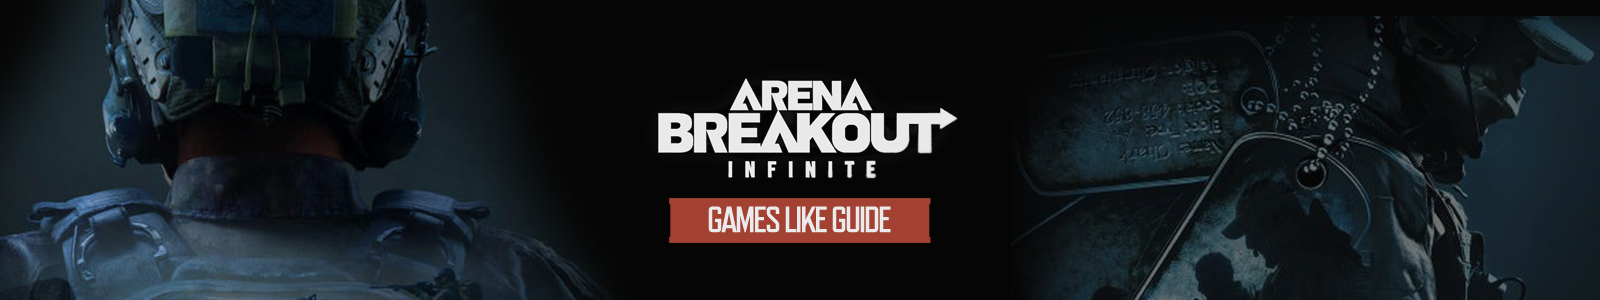 Arena Breakout Infinite games like guide